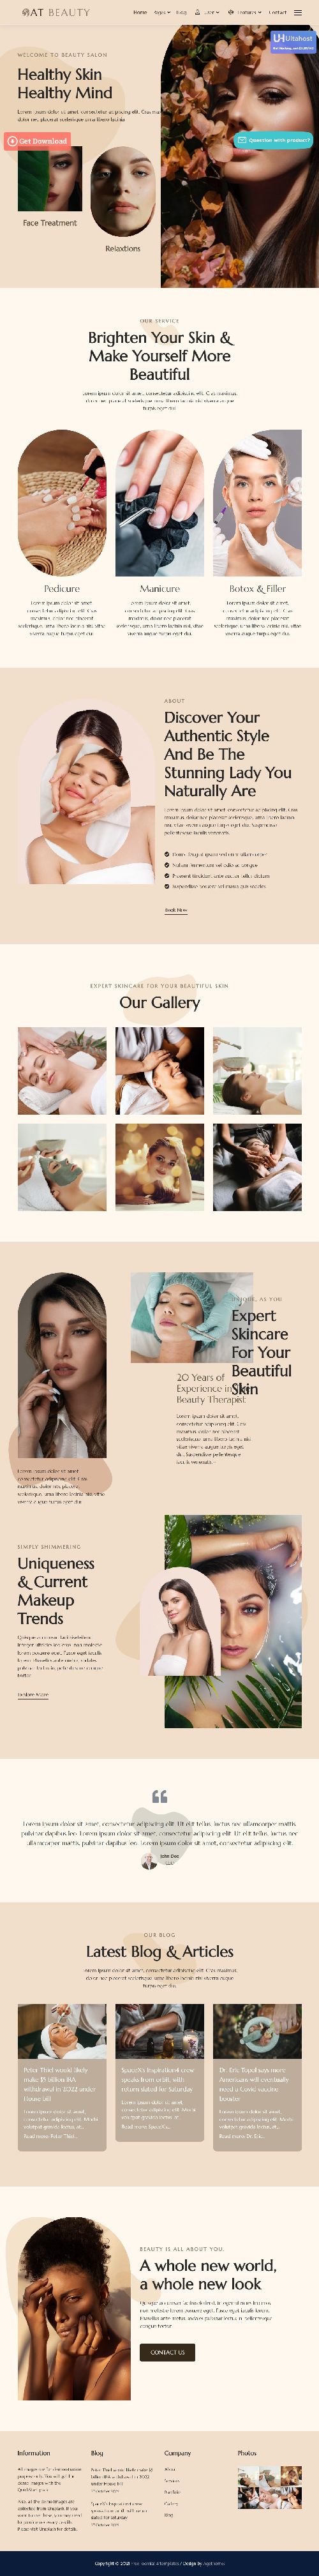 Beauty - Premium Beauty Care Services Joomla Template